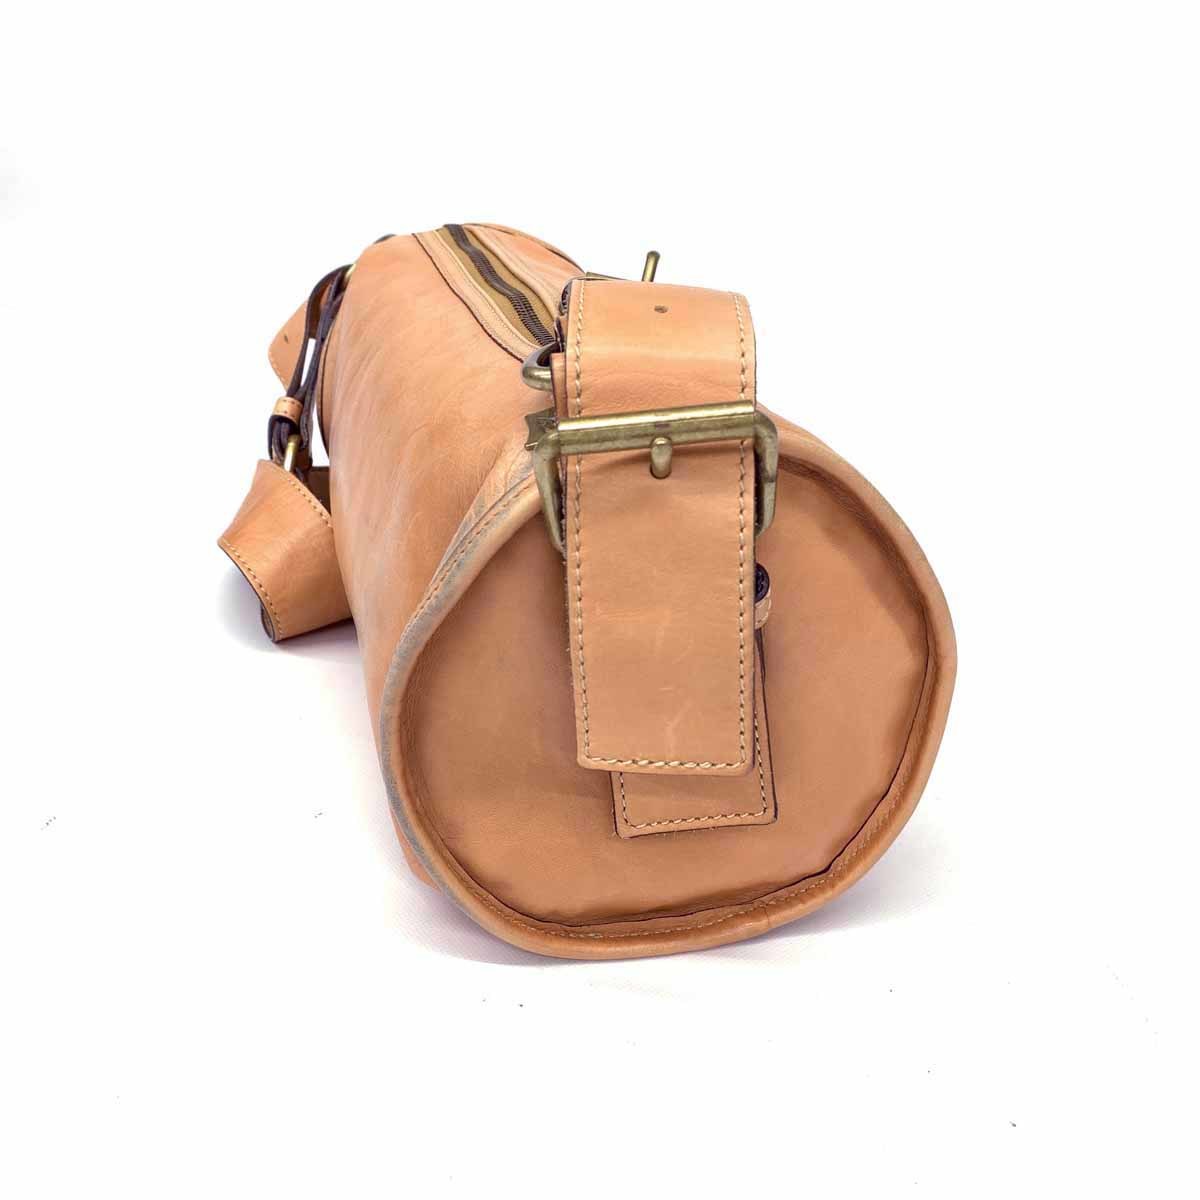 Vivienne Westwood ヴィヴィアンウエストウッド ショルダーバッグ ベージュ レザー ドラム型 ビッグオーブ レディース bag 鞄